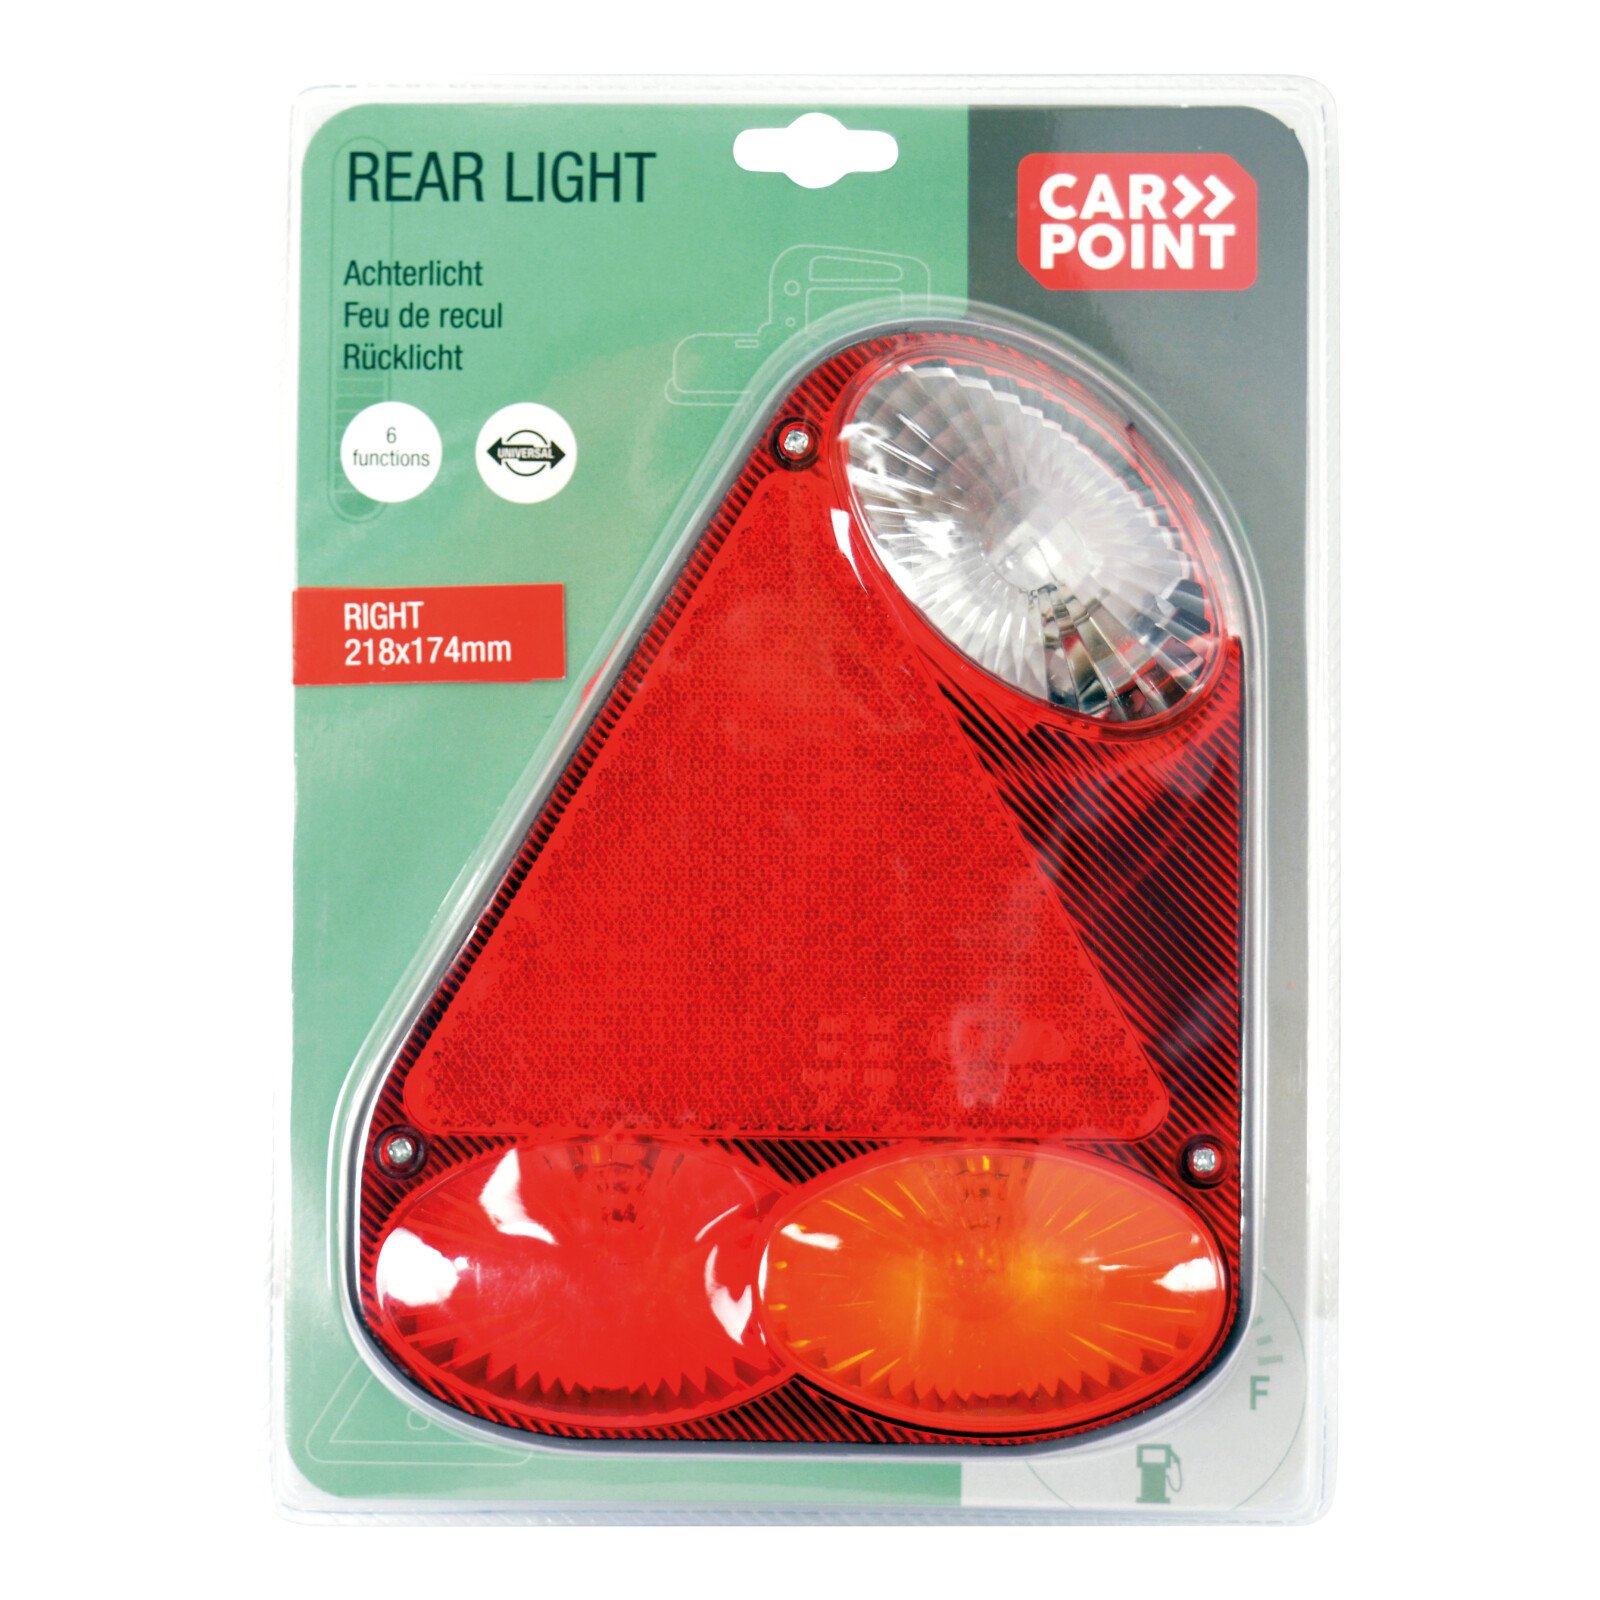 Rear light 6funtions 174x218mm Carpoint - Right thumb